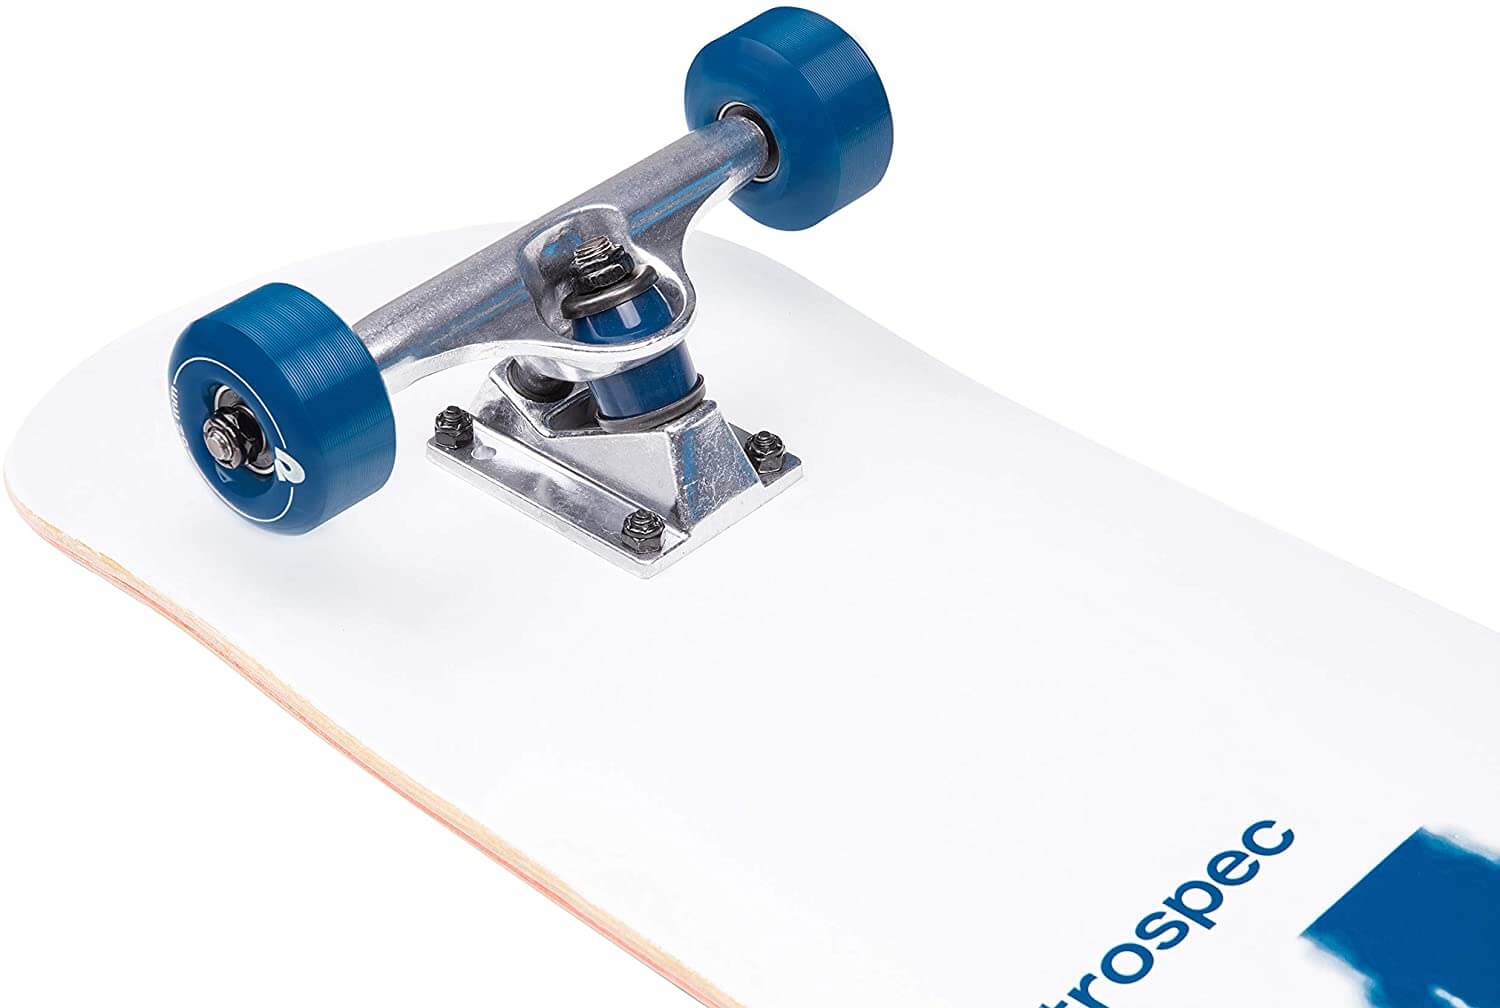 Alameda Skateboard Review